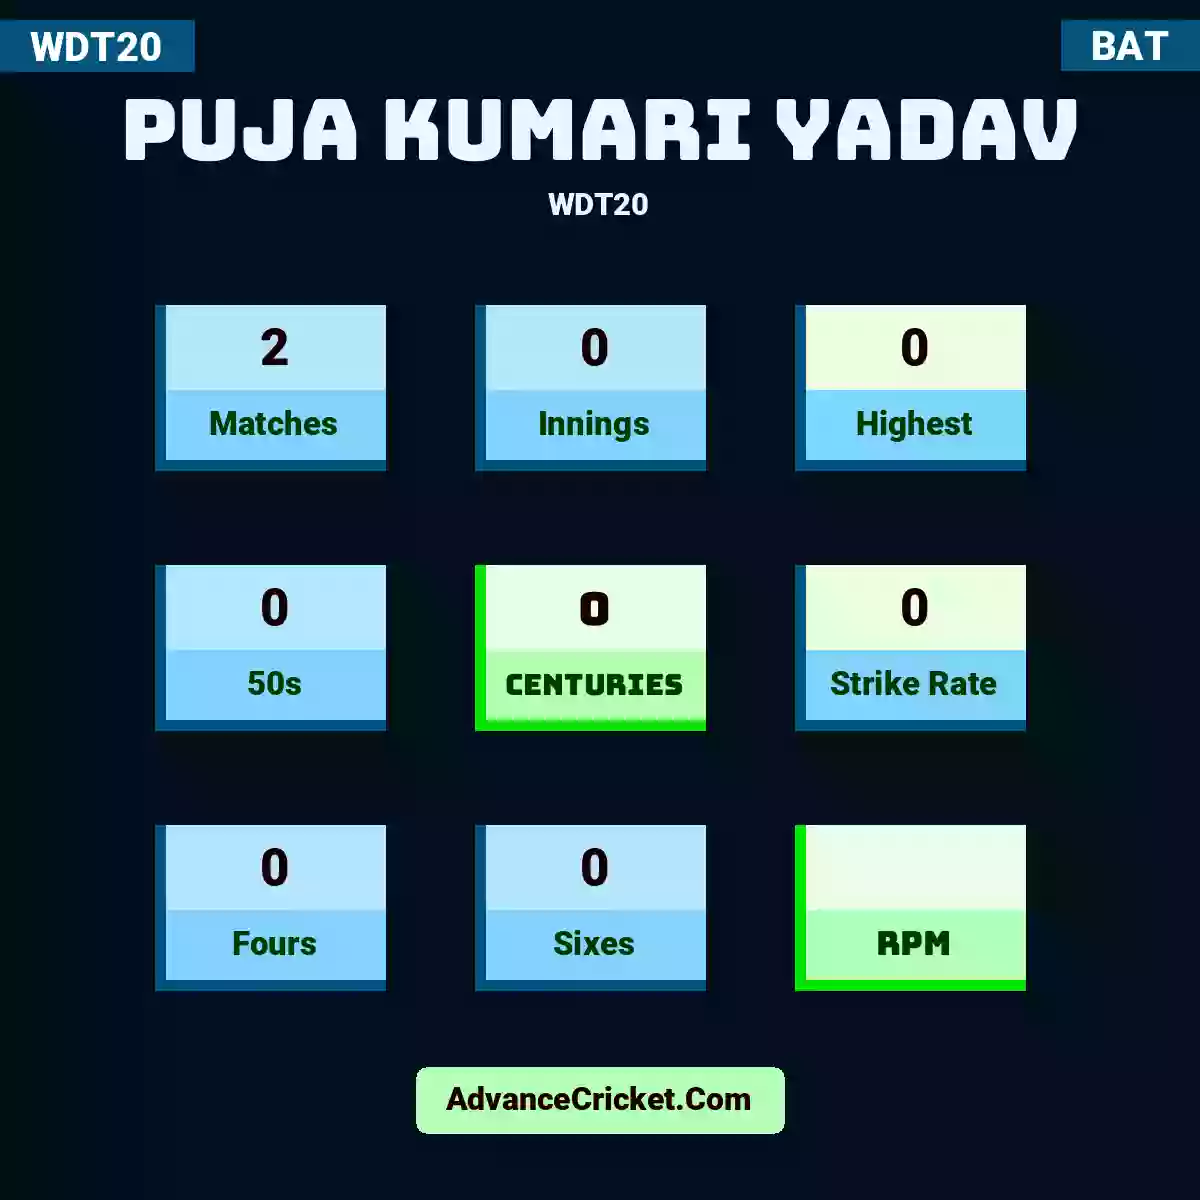 Puja Kumari Yadav WDT20 , Puja Kumari Yadav played 2 matches, scored 0 runs as highest, 0 half-centuries, and 0 centuries, with a strike rate of 0. P.Kumari.Yadav hit 0 fours and 0 sixes.